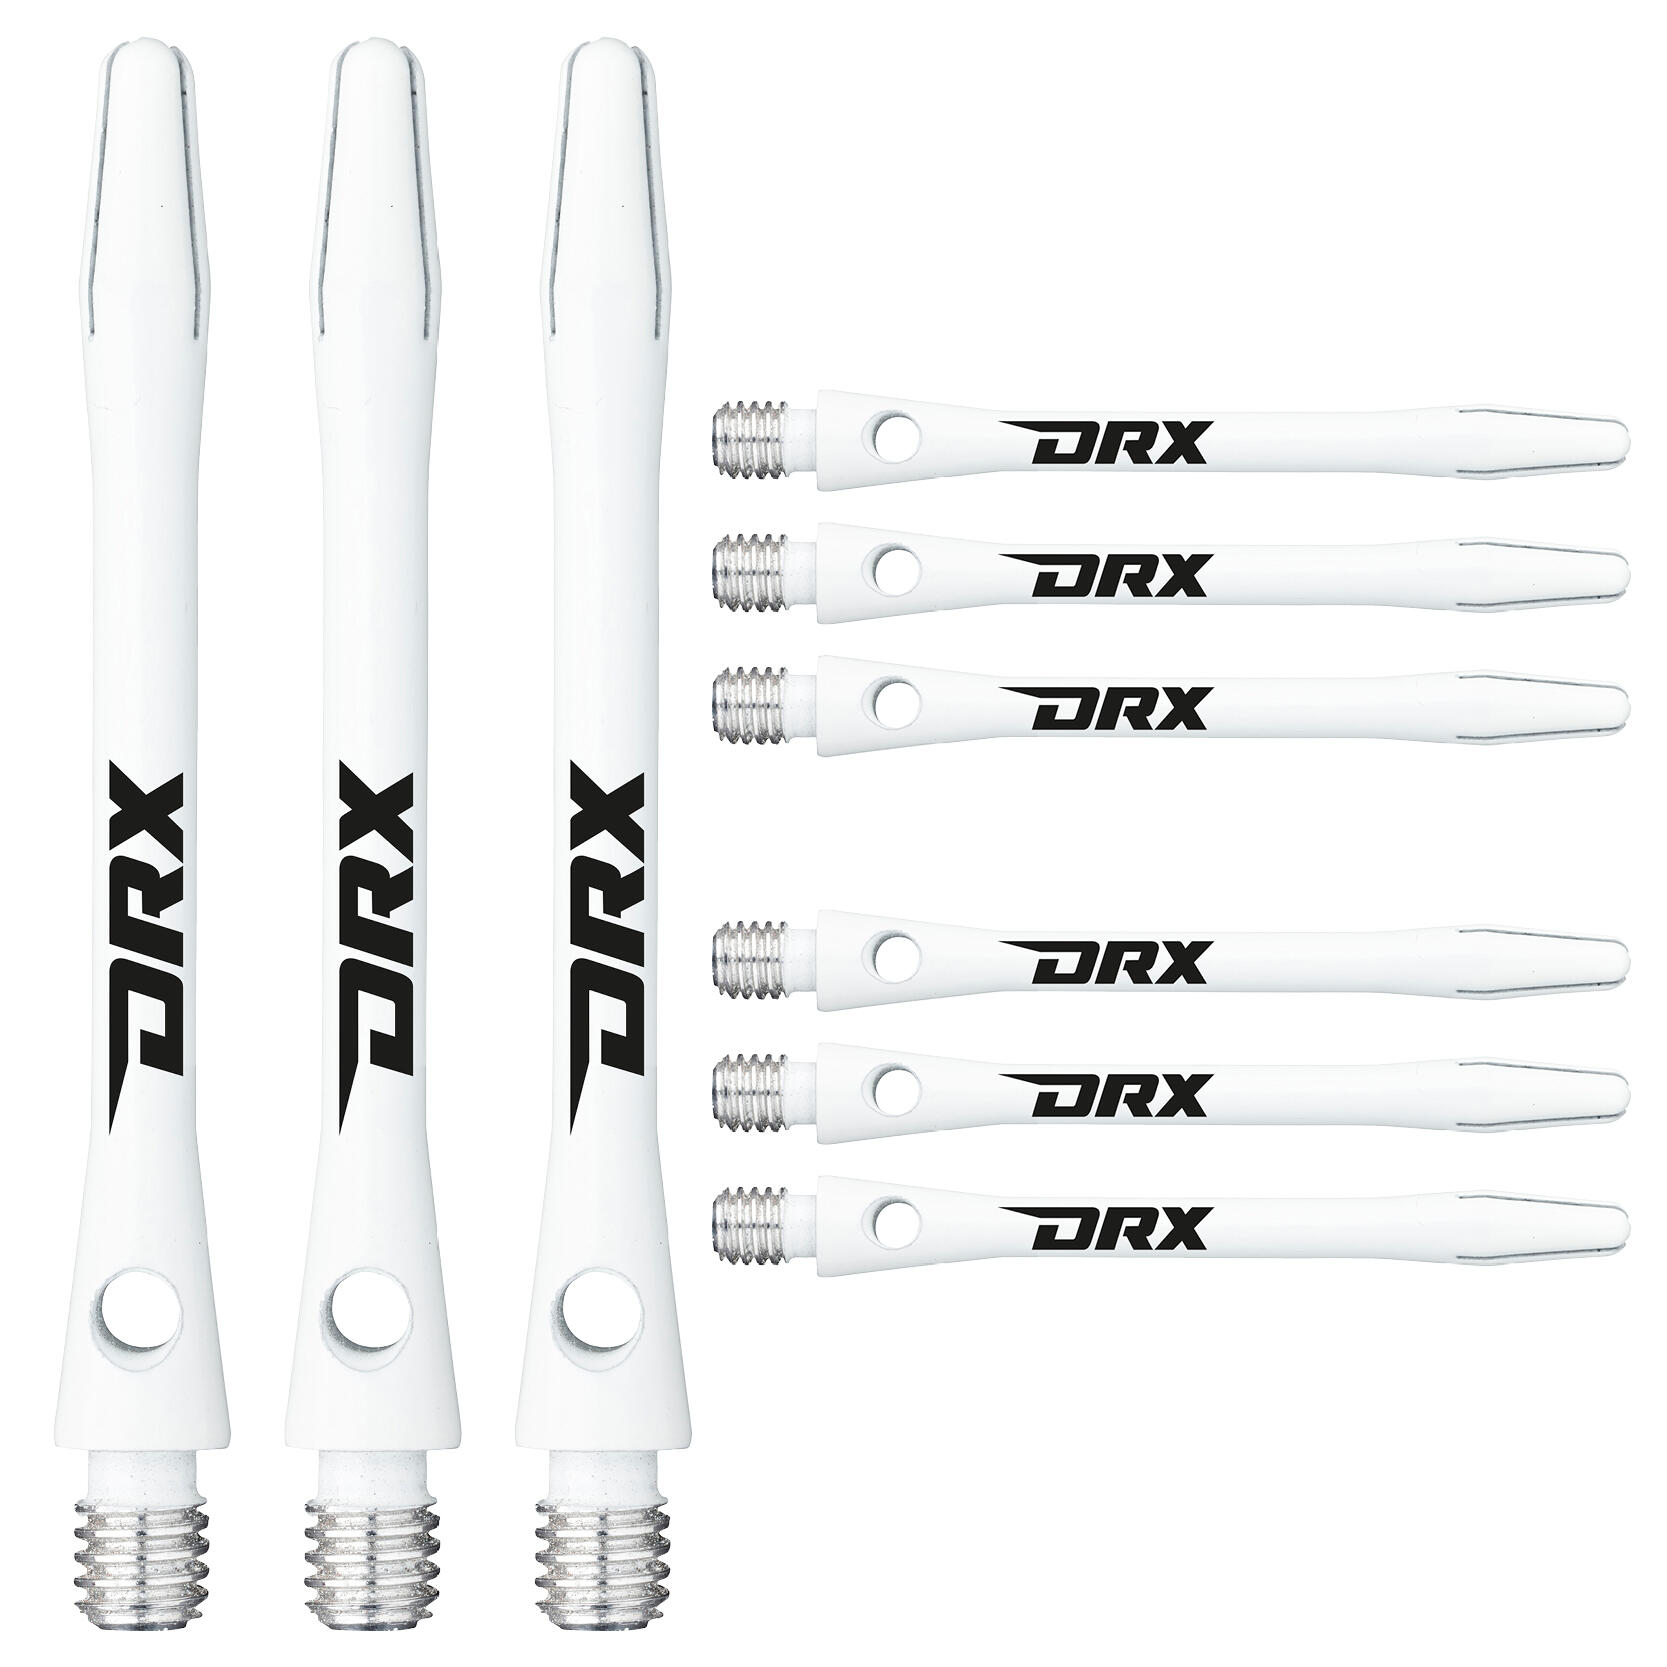 Red Dragon DRX Coated Aluminium Medium White Dart Shafts - 2 sets per pack 1/4